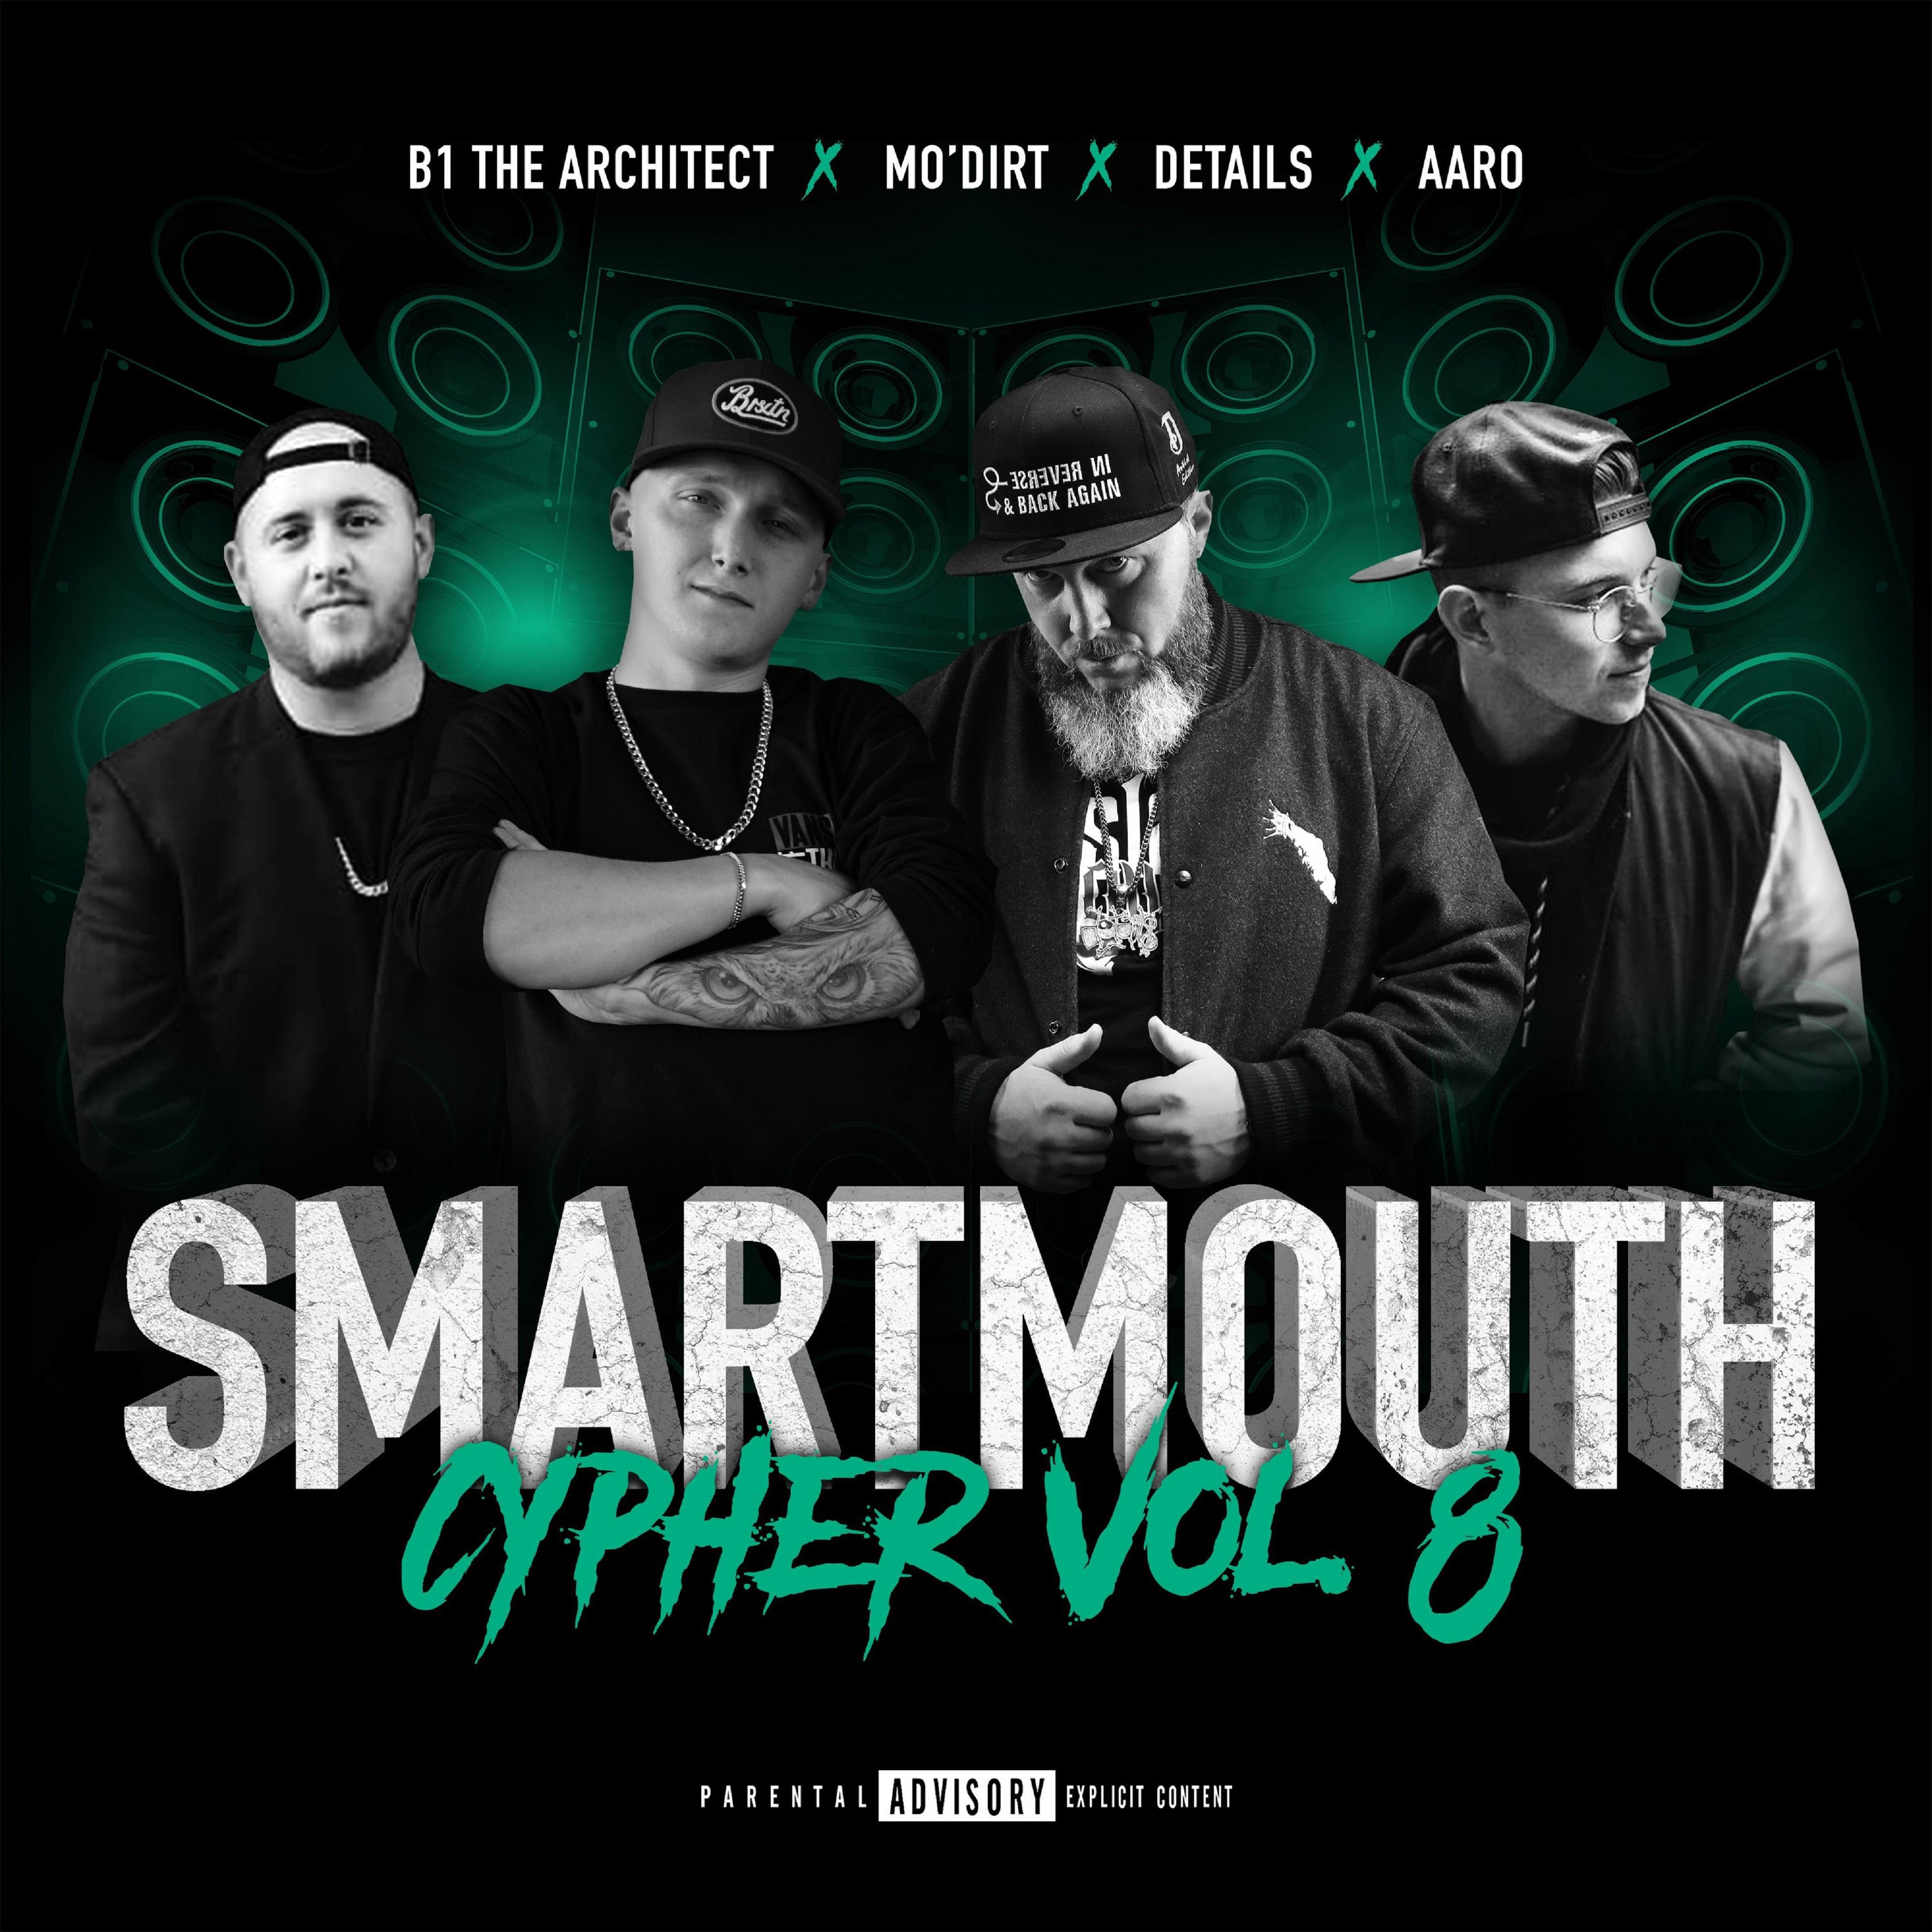 Mo'Dirt - Smartmouth Cypher Vol. 8